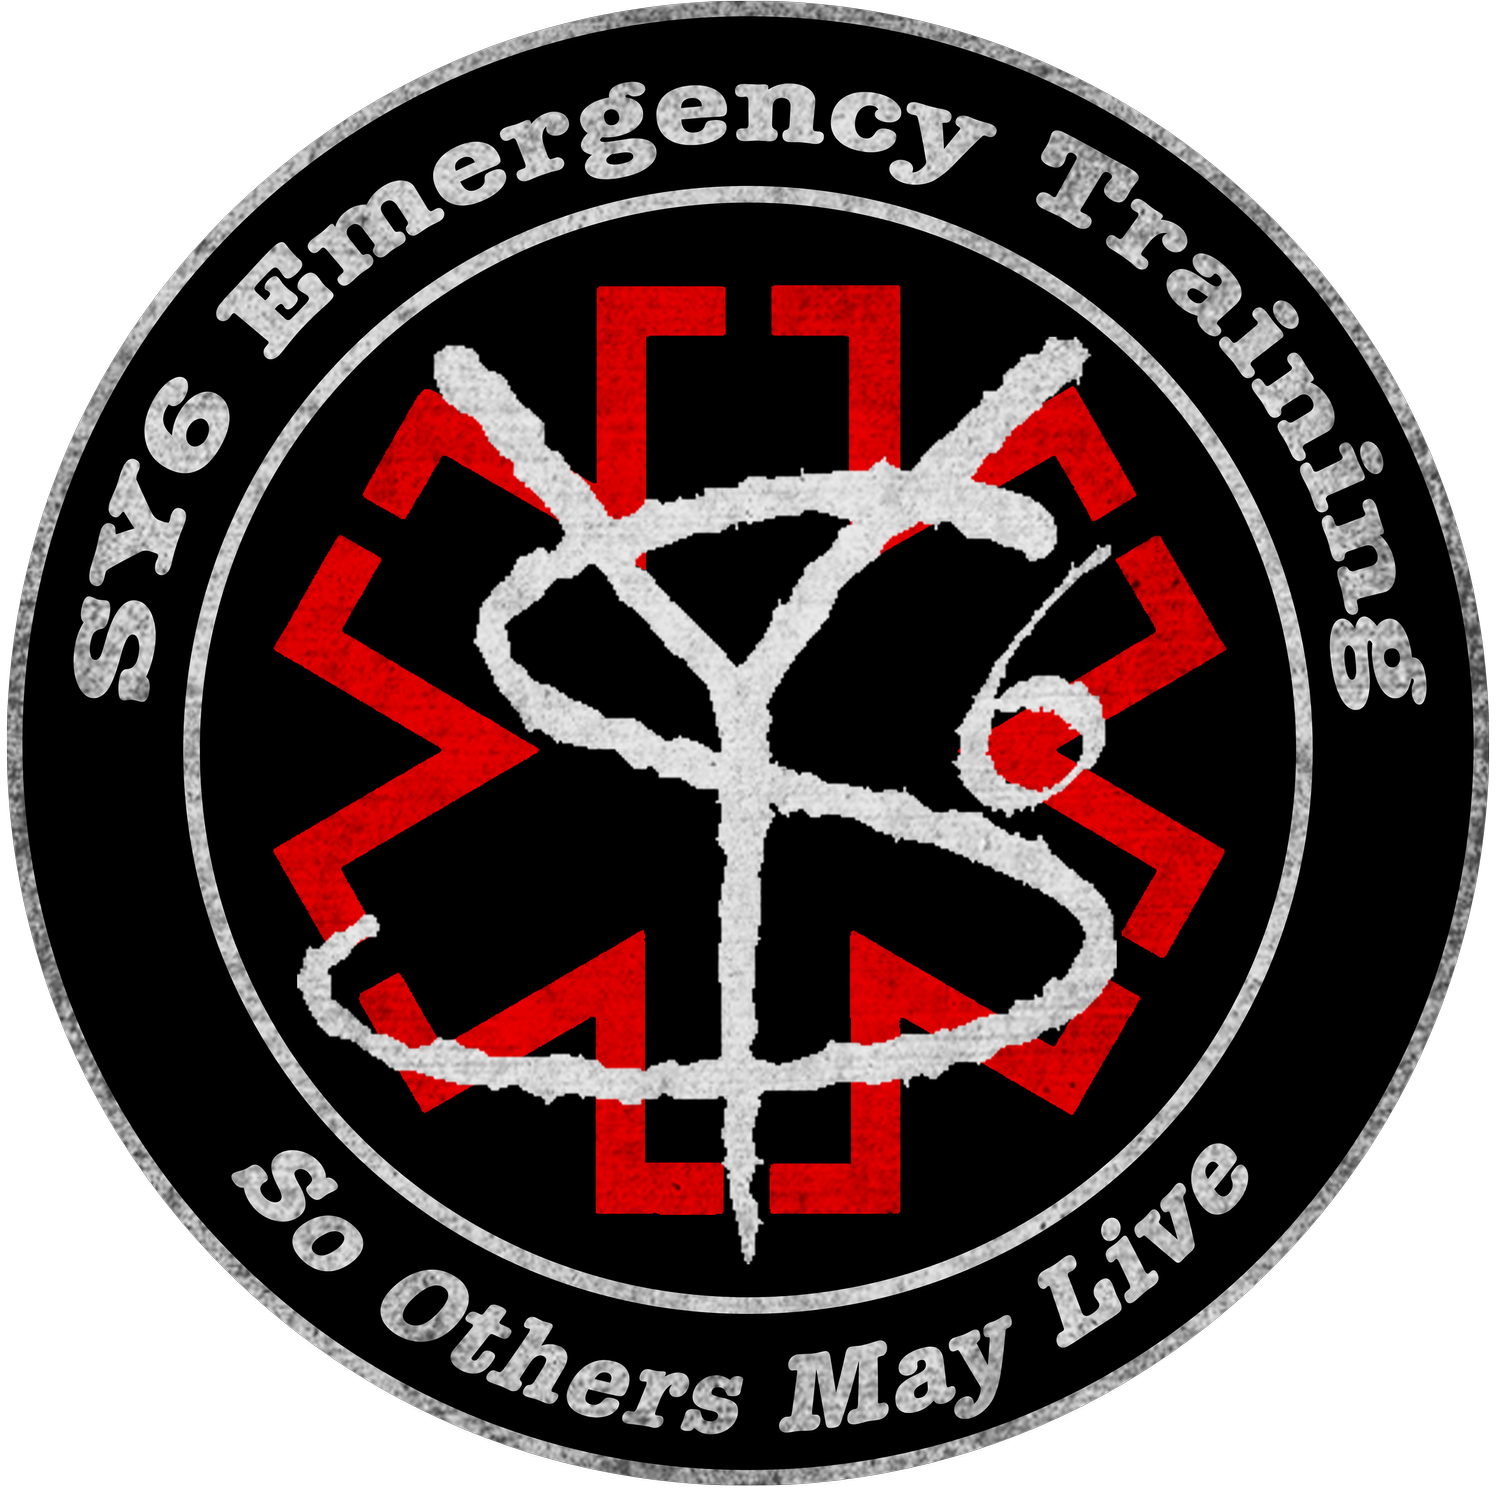 SY6 Emergency Training & Equipment Sales